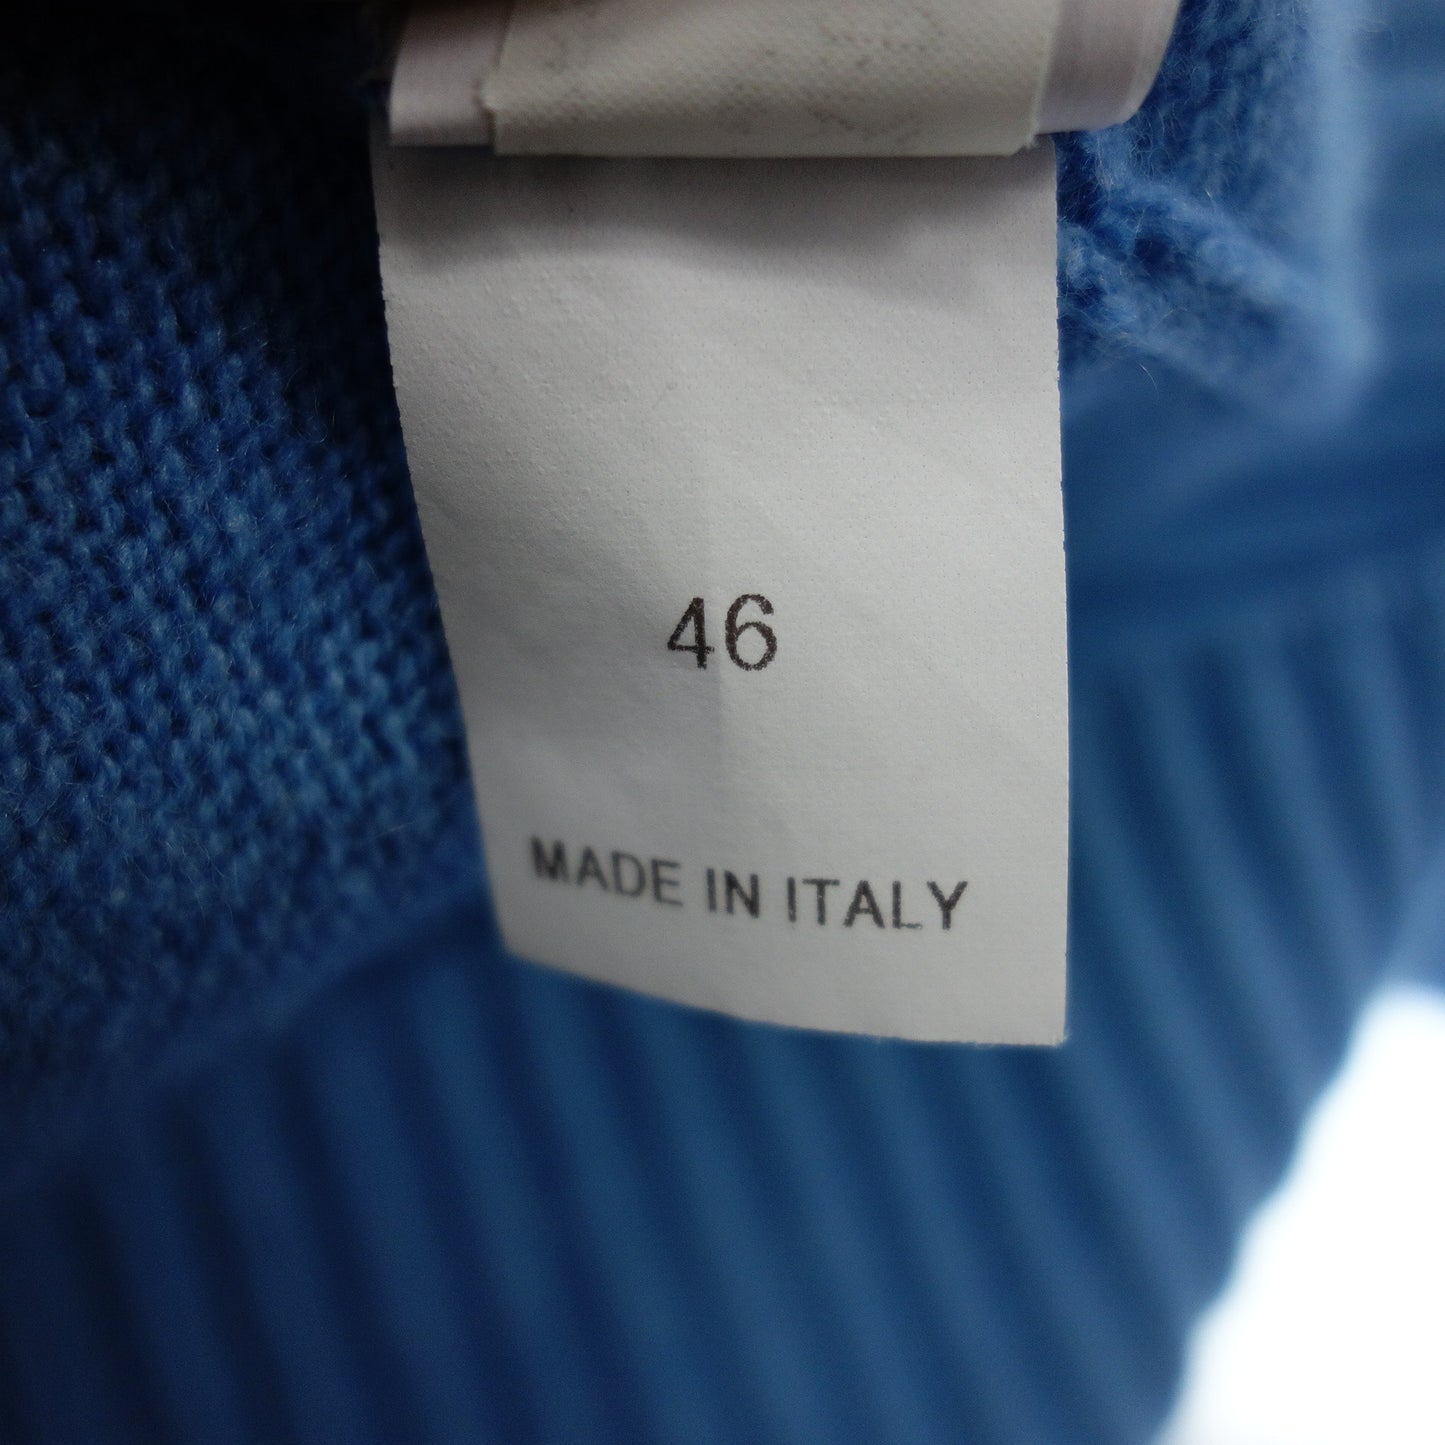 Brunello Cucinelli knit sweater wool cashmere blend men's blue 46 BRUNELLO CUCINELLI [AFB2] [Used] 